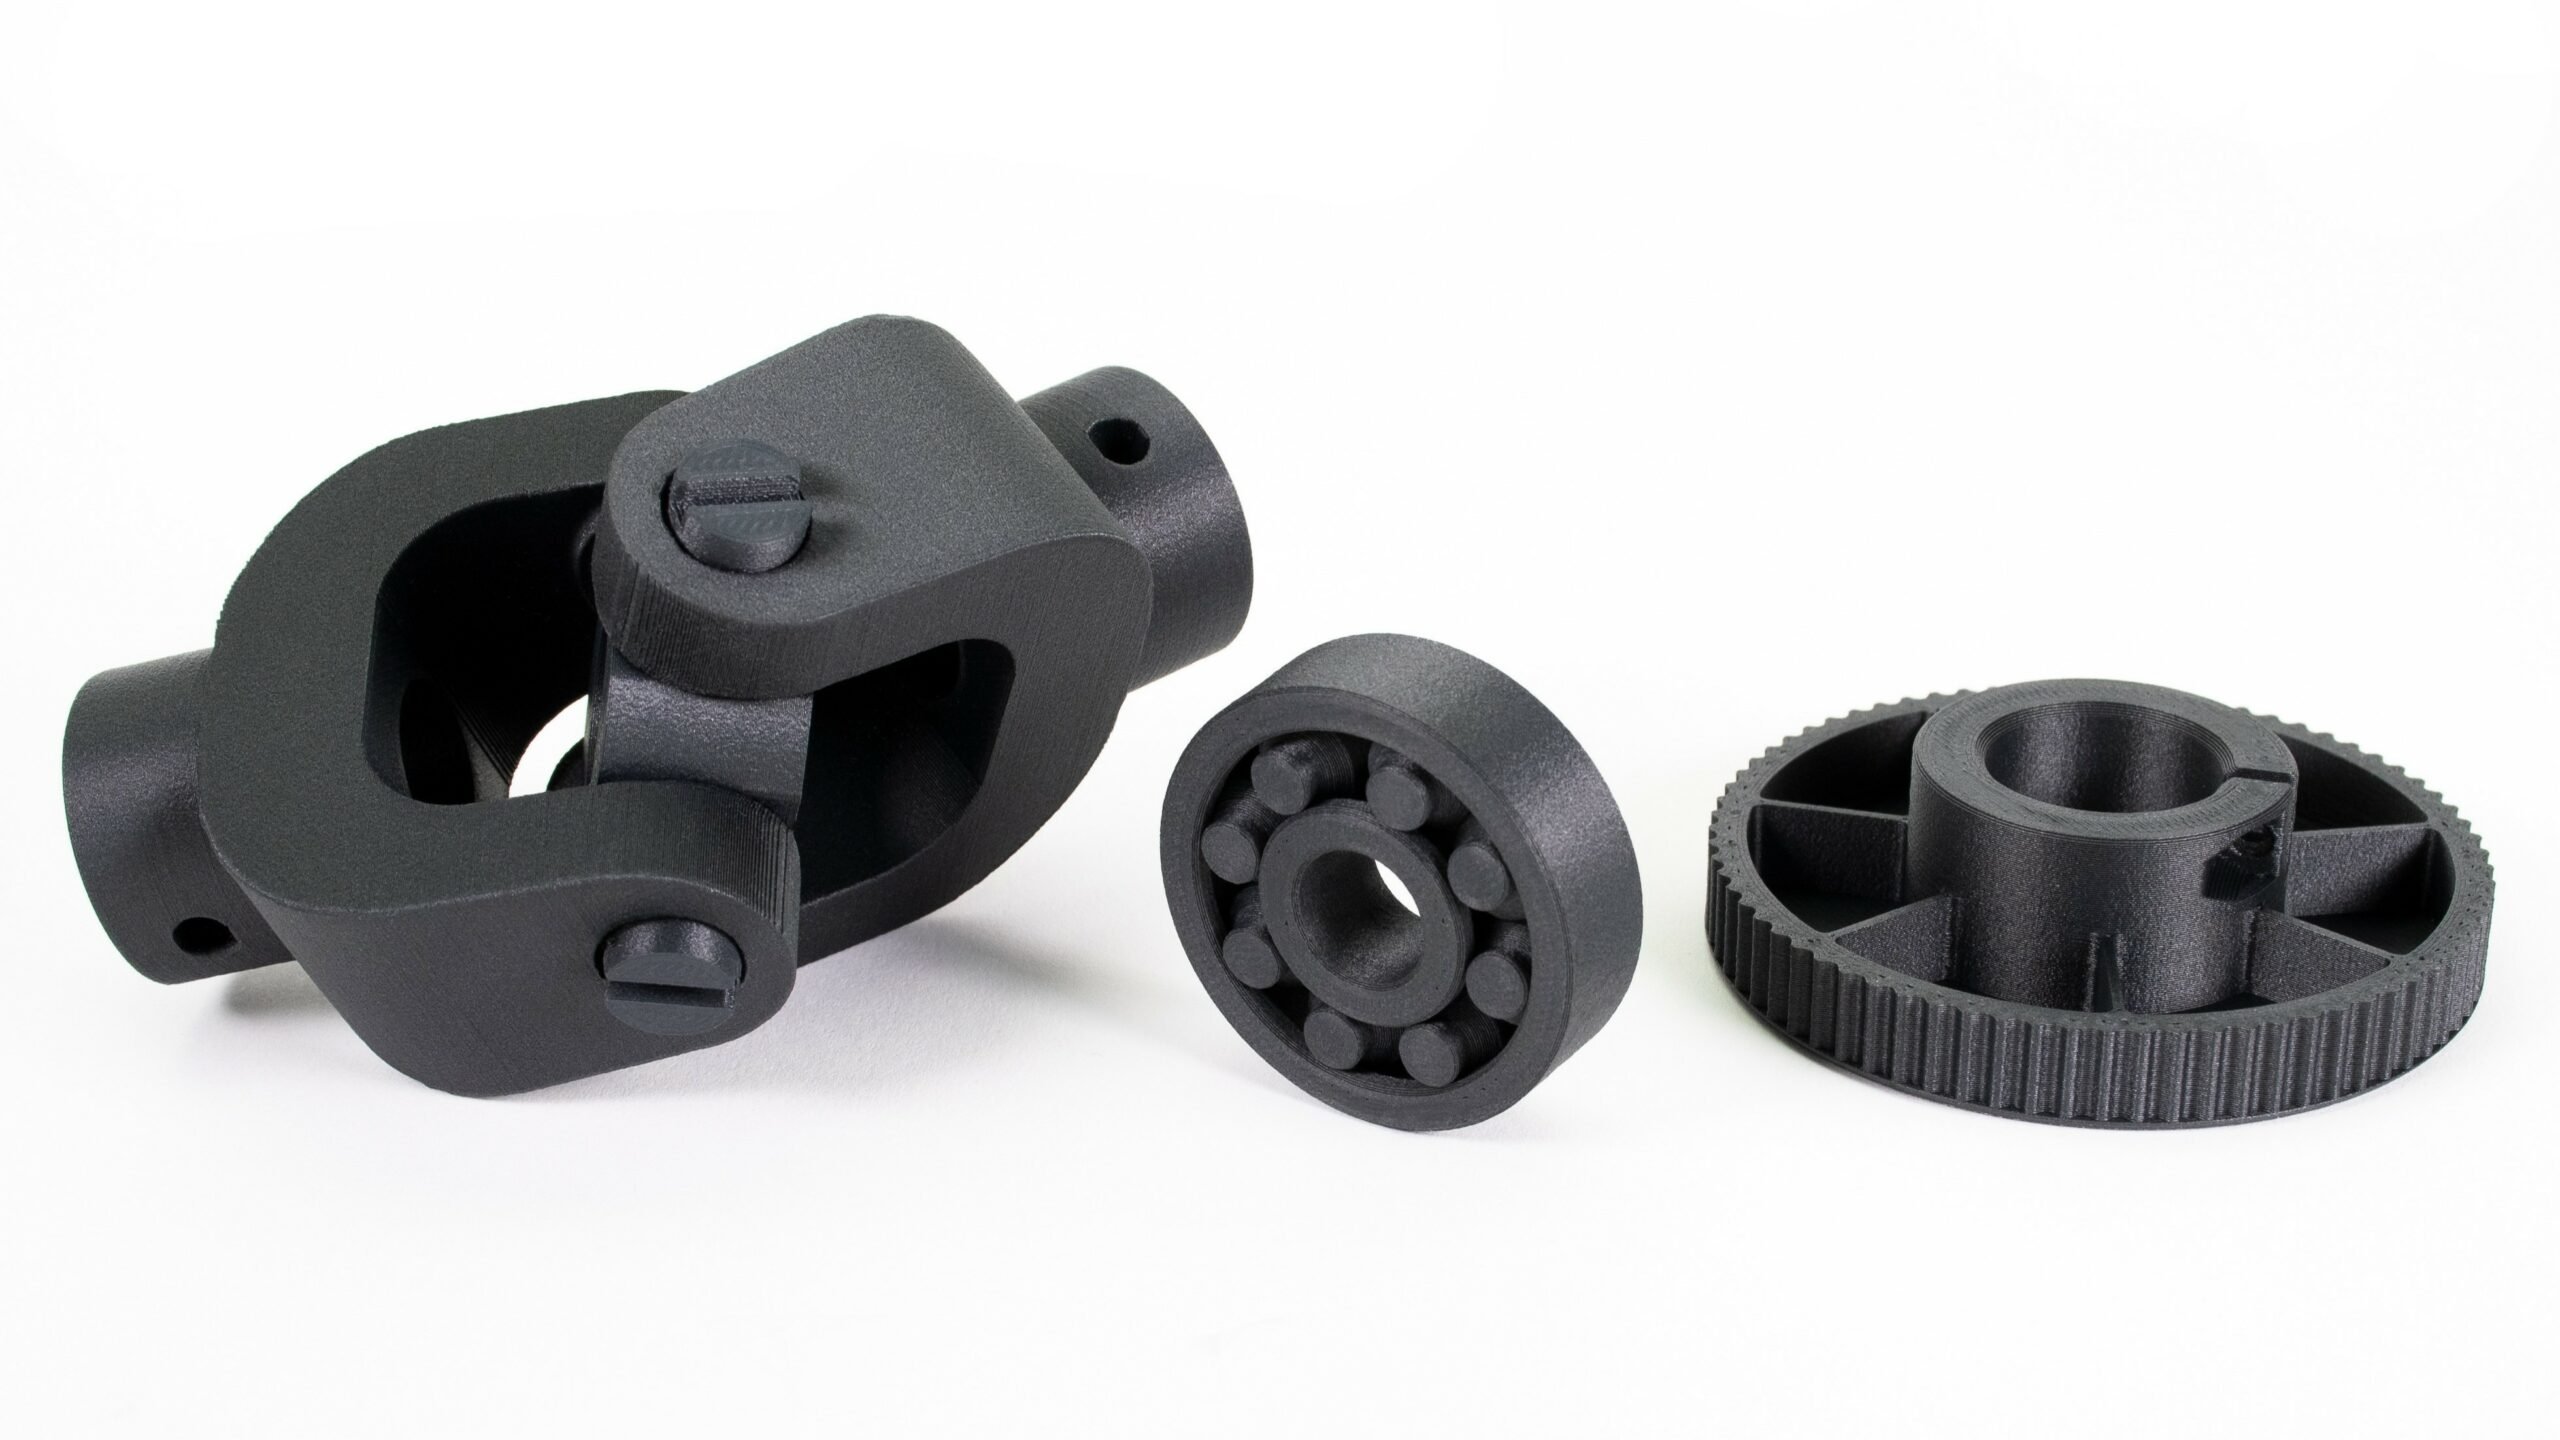 iSANMATE carbon fiber 3d printer filament